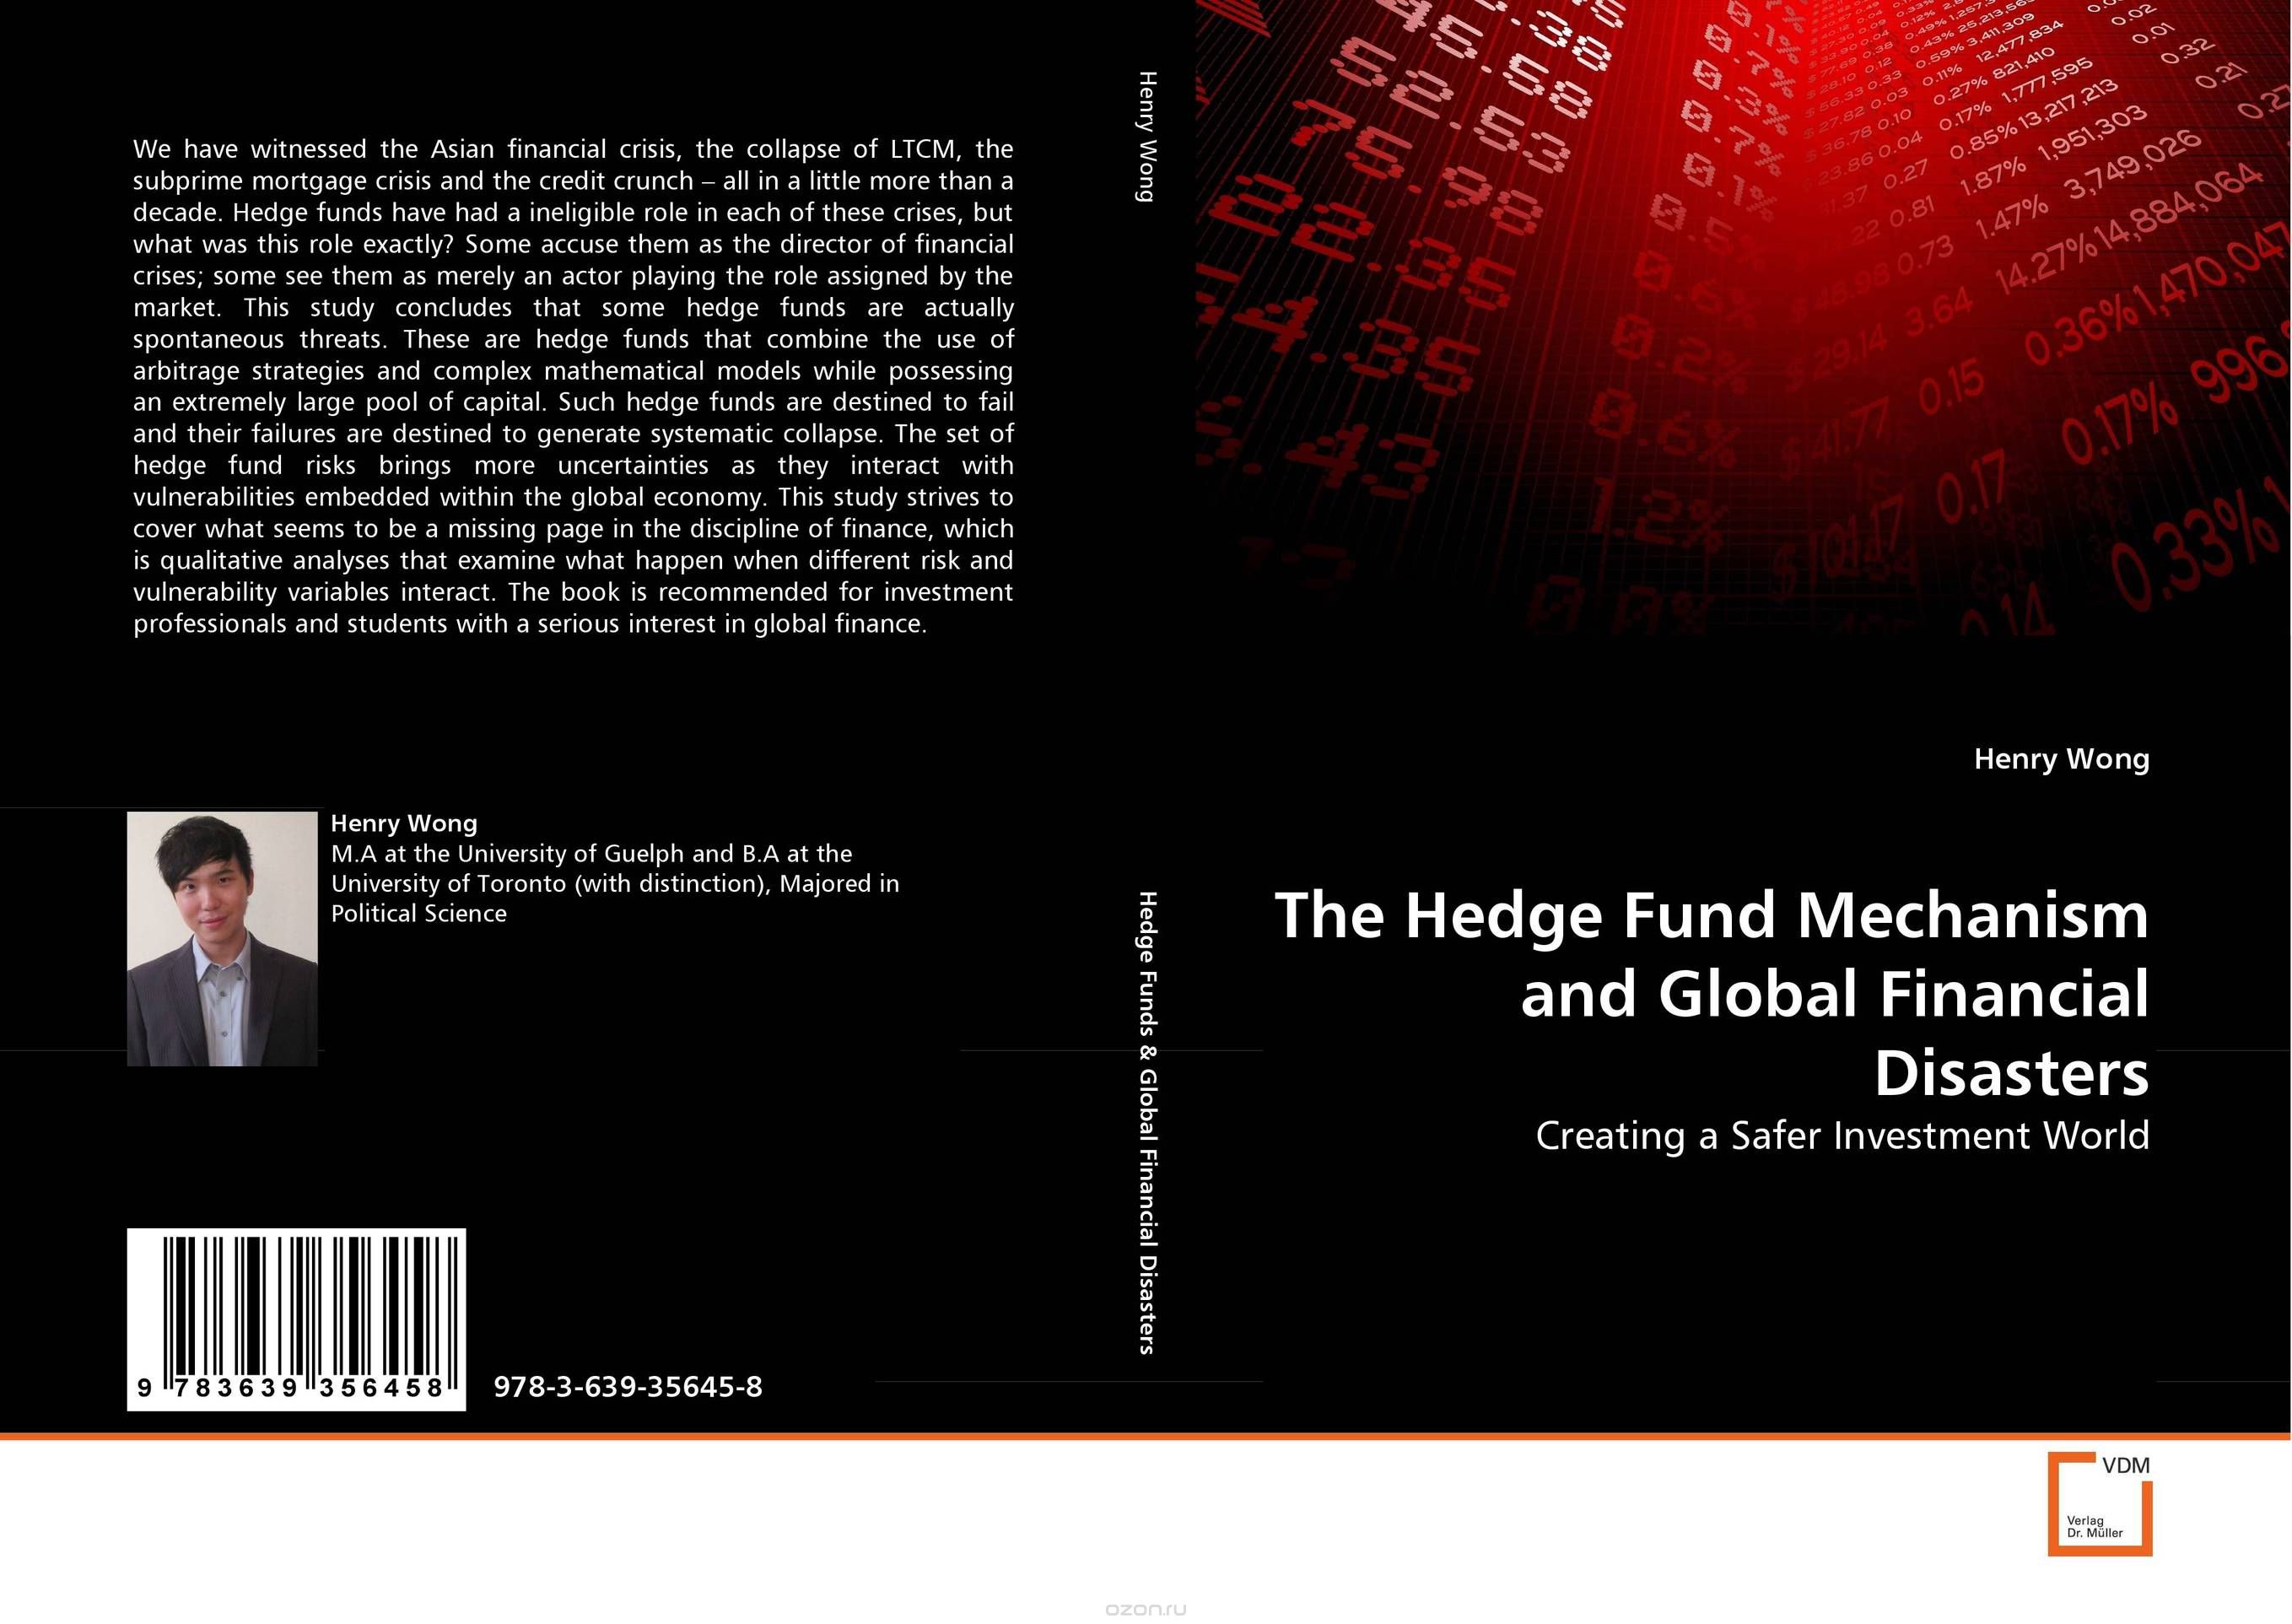 Скачать книгу "The Hedge Fund Mechanism and Global Financial Disasters"